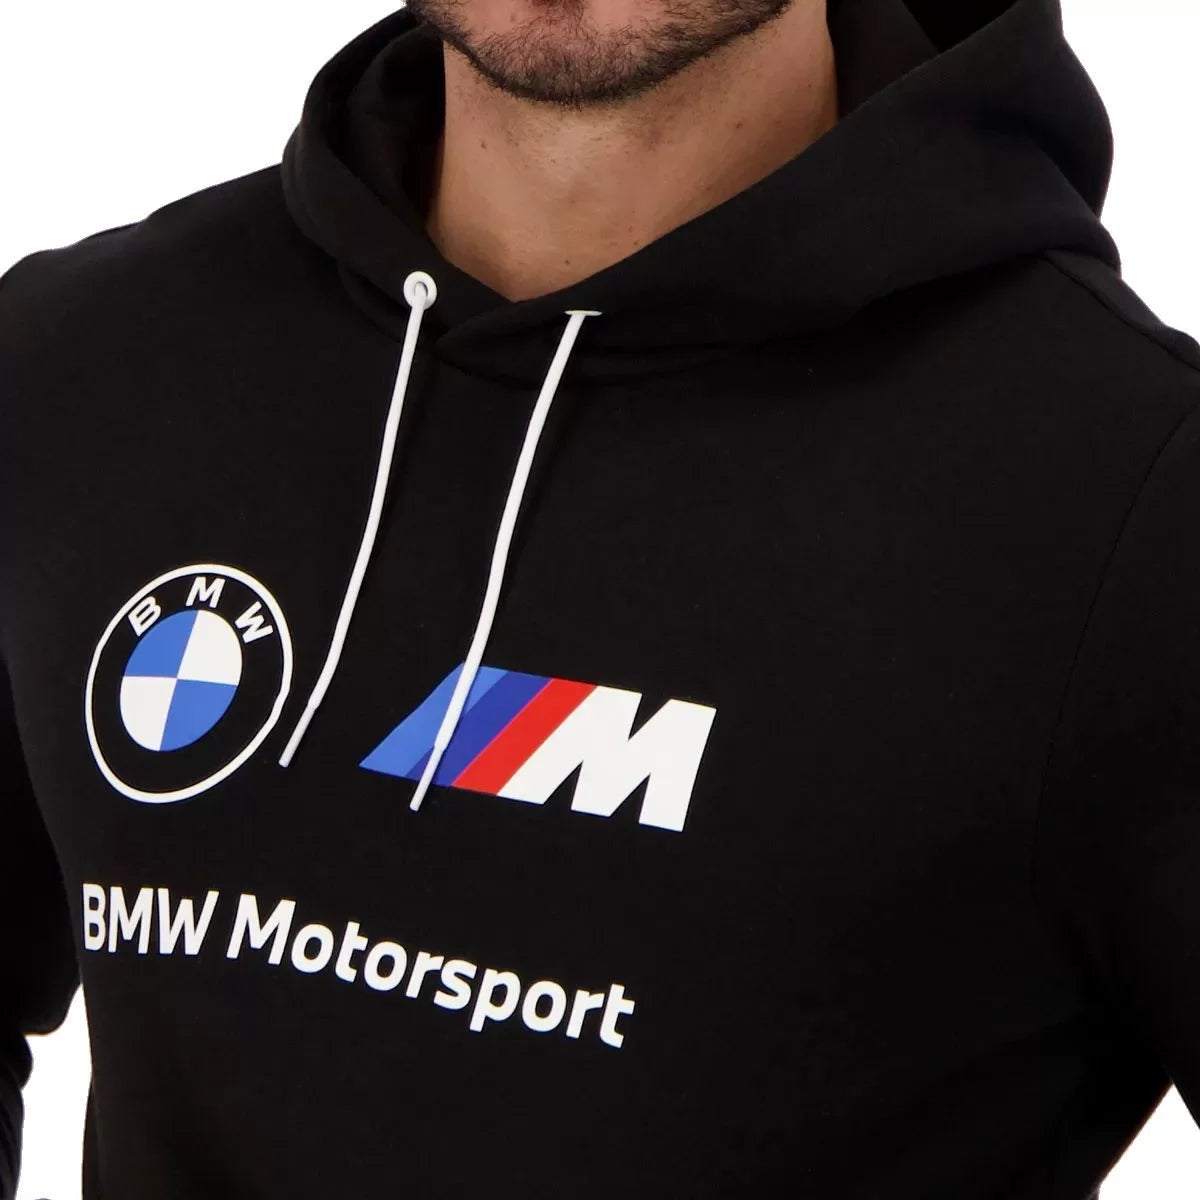 Puma-H-Chandail with BMW Motosport hood